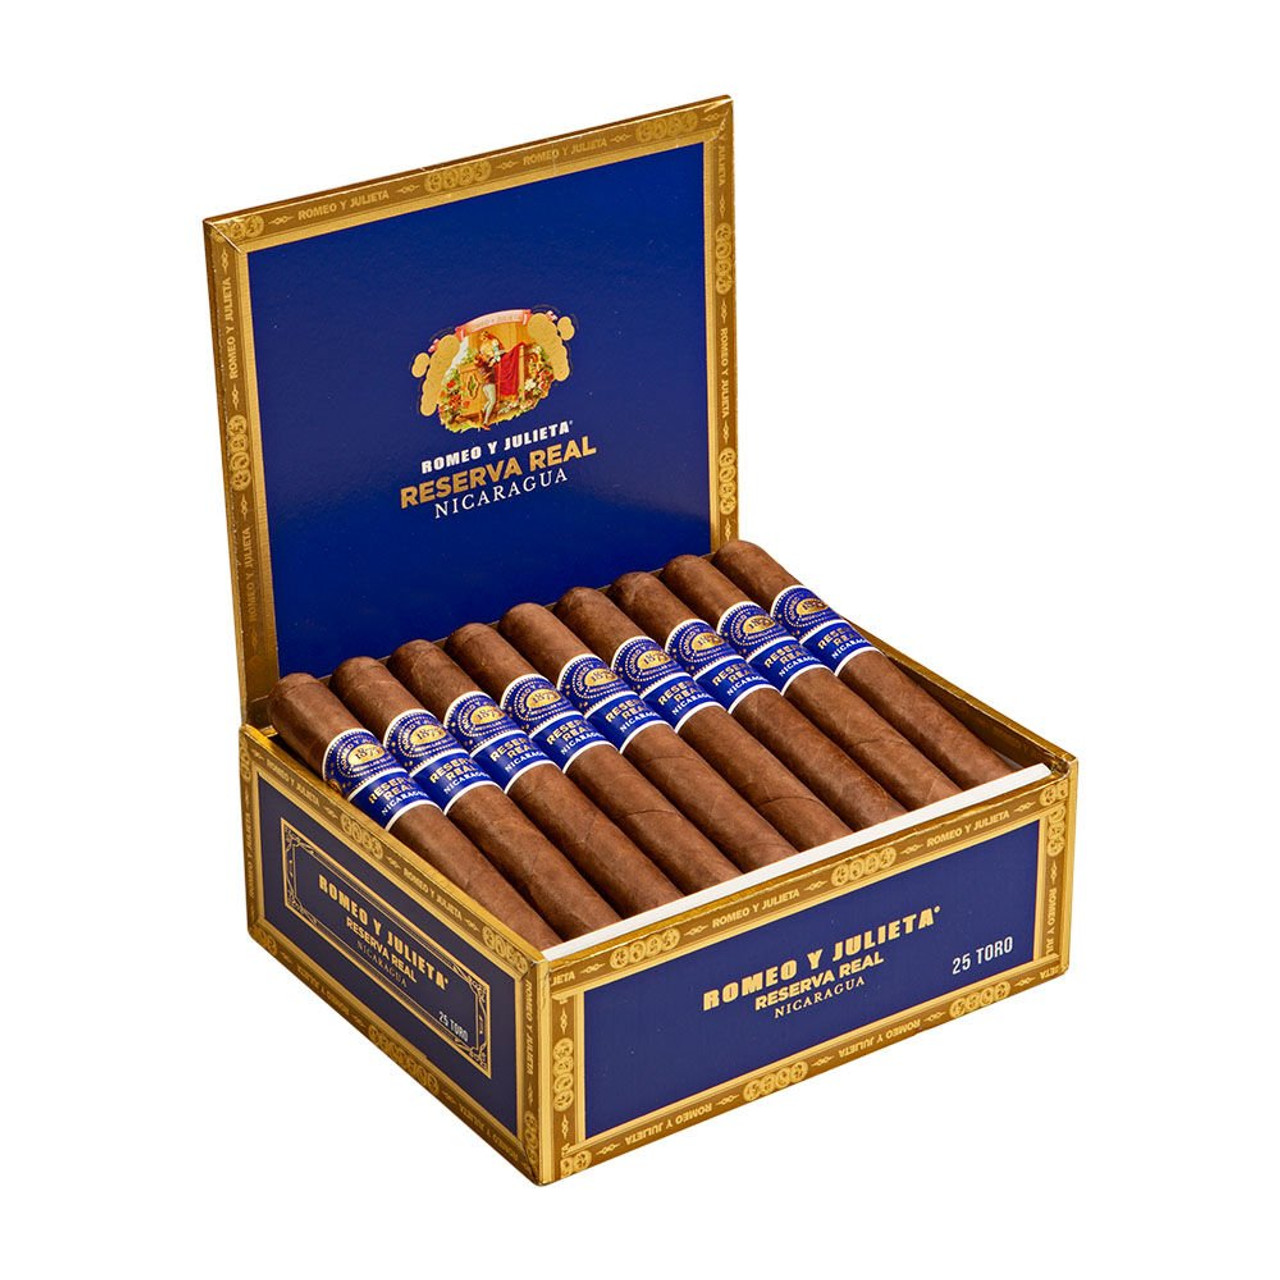 Romeo y Julieta Reserva Real Nicaragua Robusto Cigars - 5 x 50 (Box of 25) Open